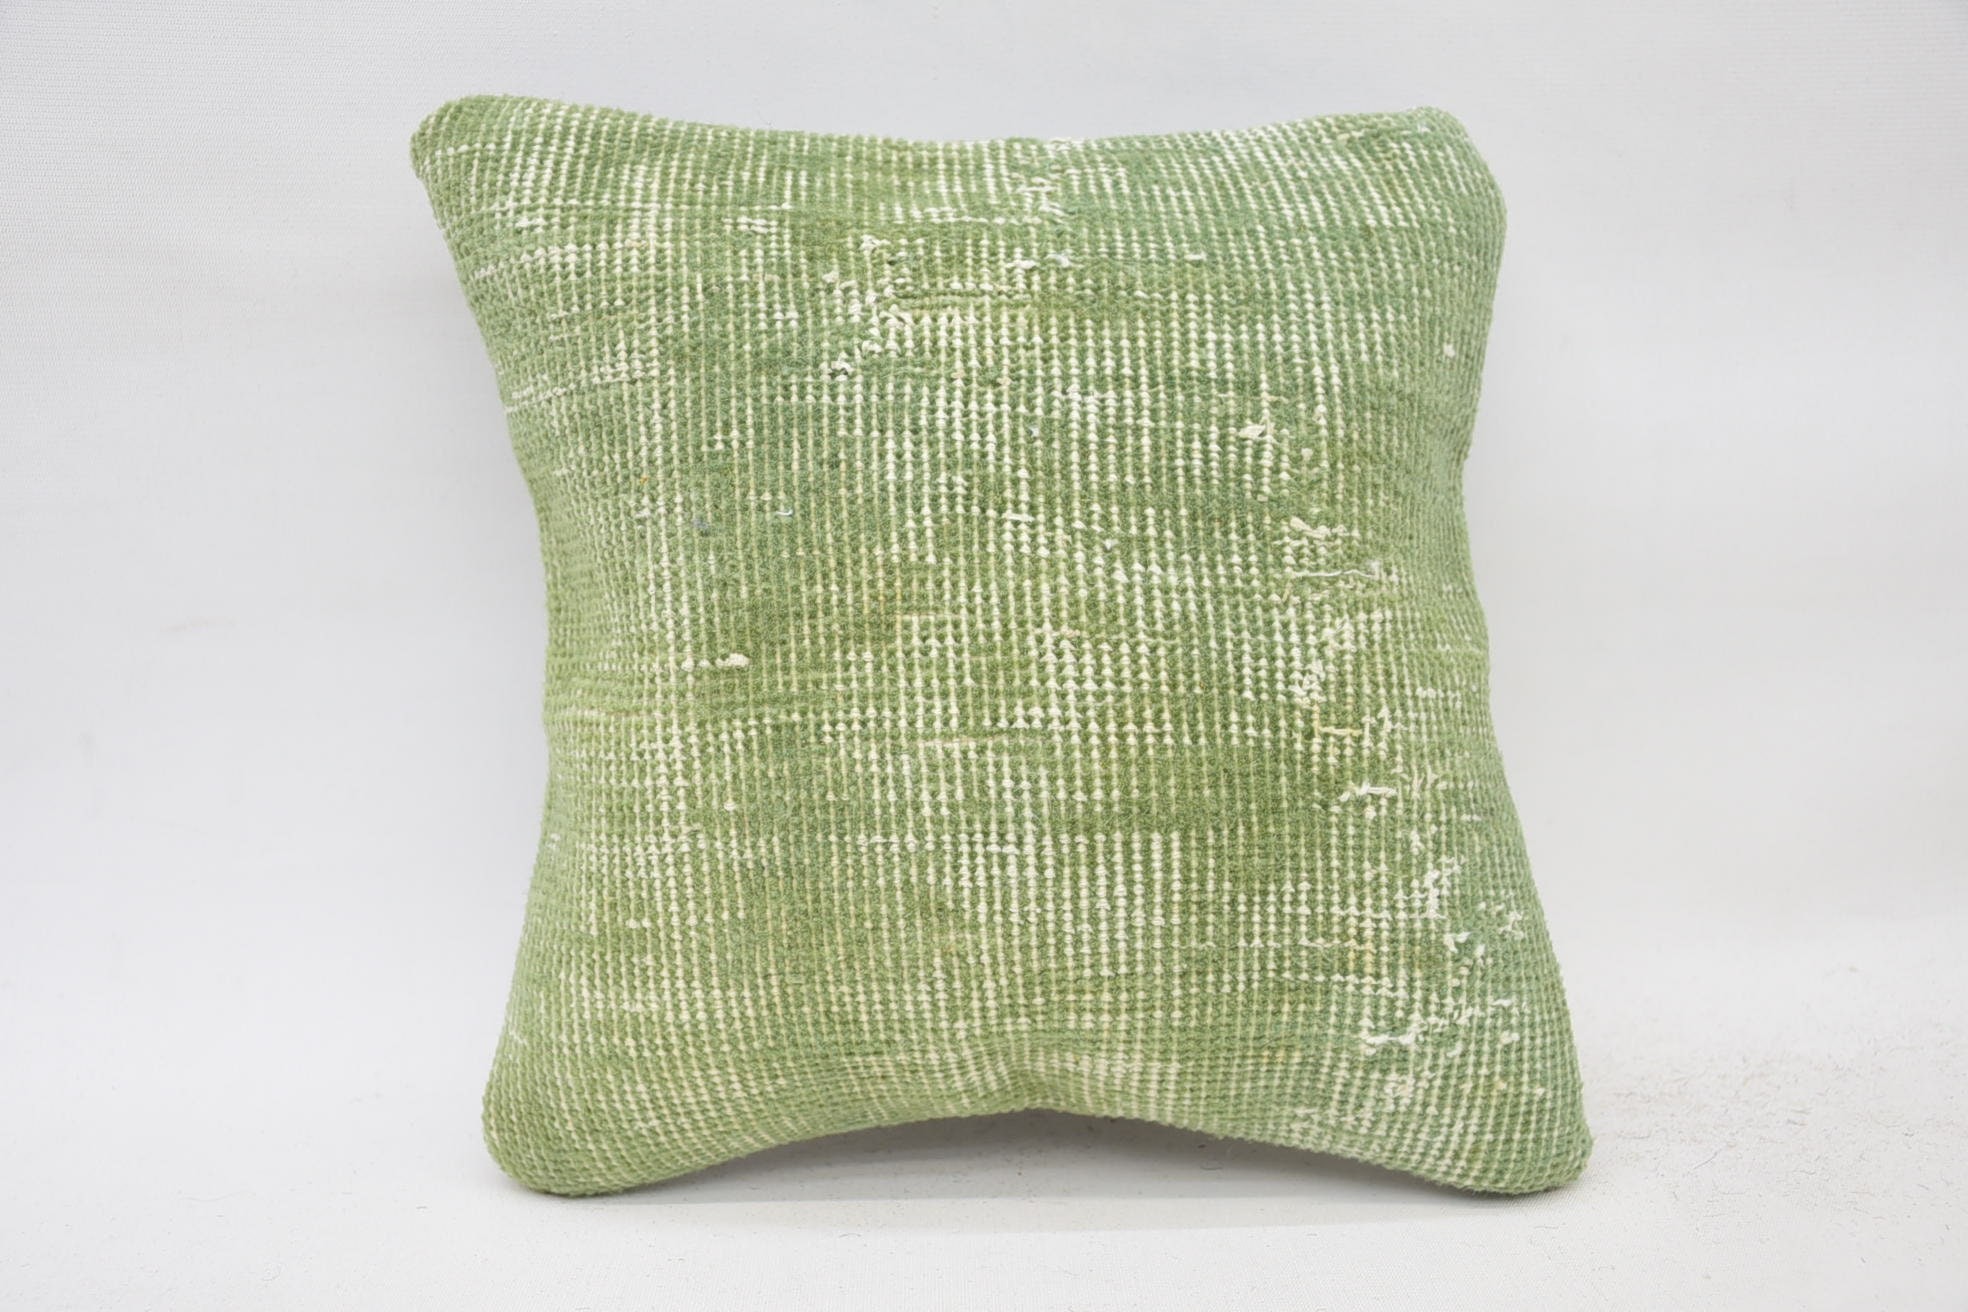 Boho Pillow Sham Cover, Kilim Pillow Cover, Couch Pillow Case, Turkish Kilim Pillow, 12"x12" Green Pillow Case, Floor Pillow Cover